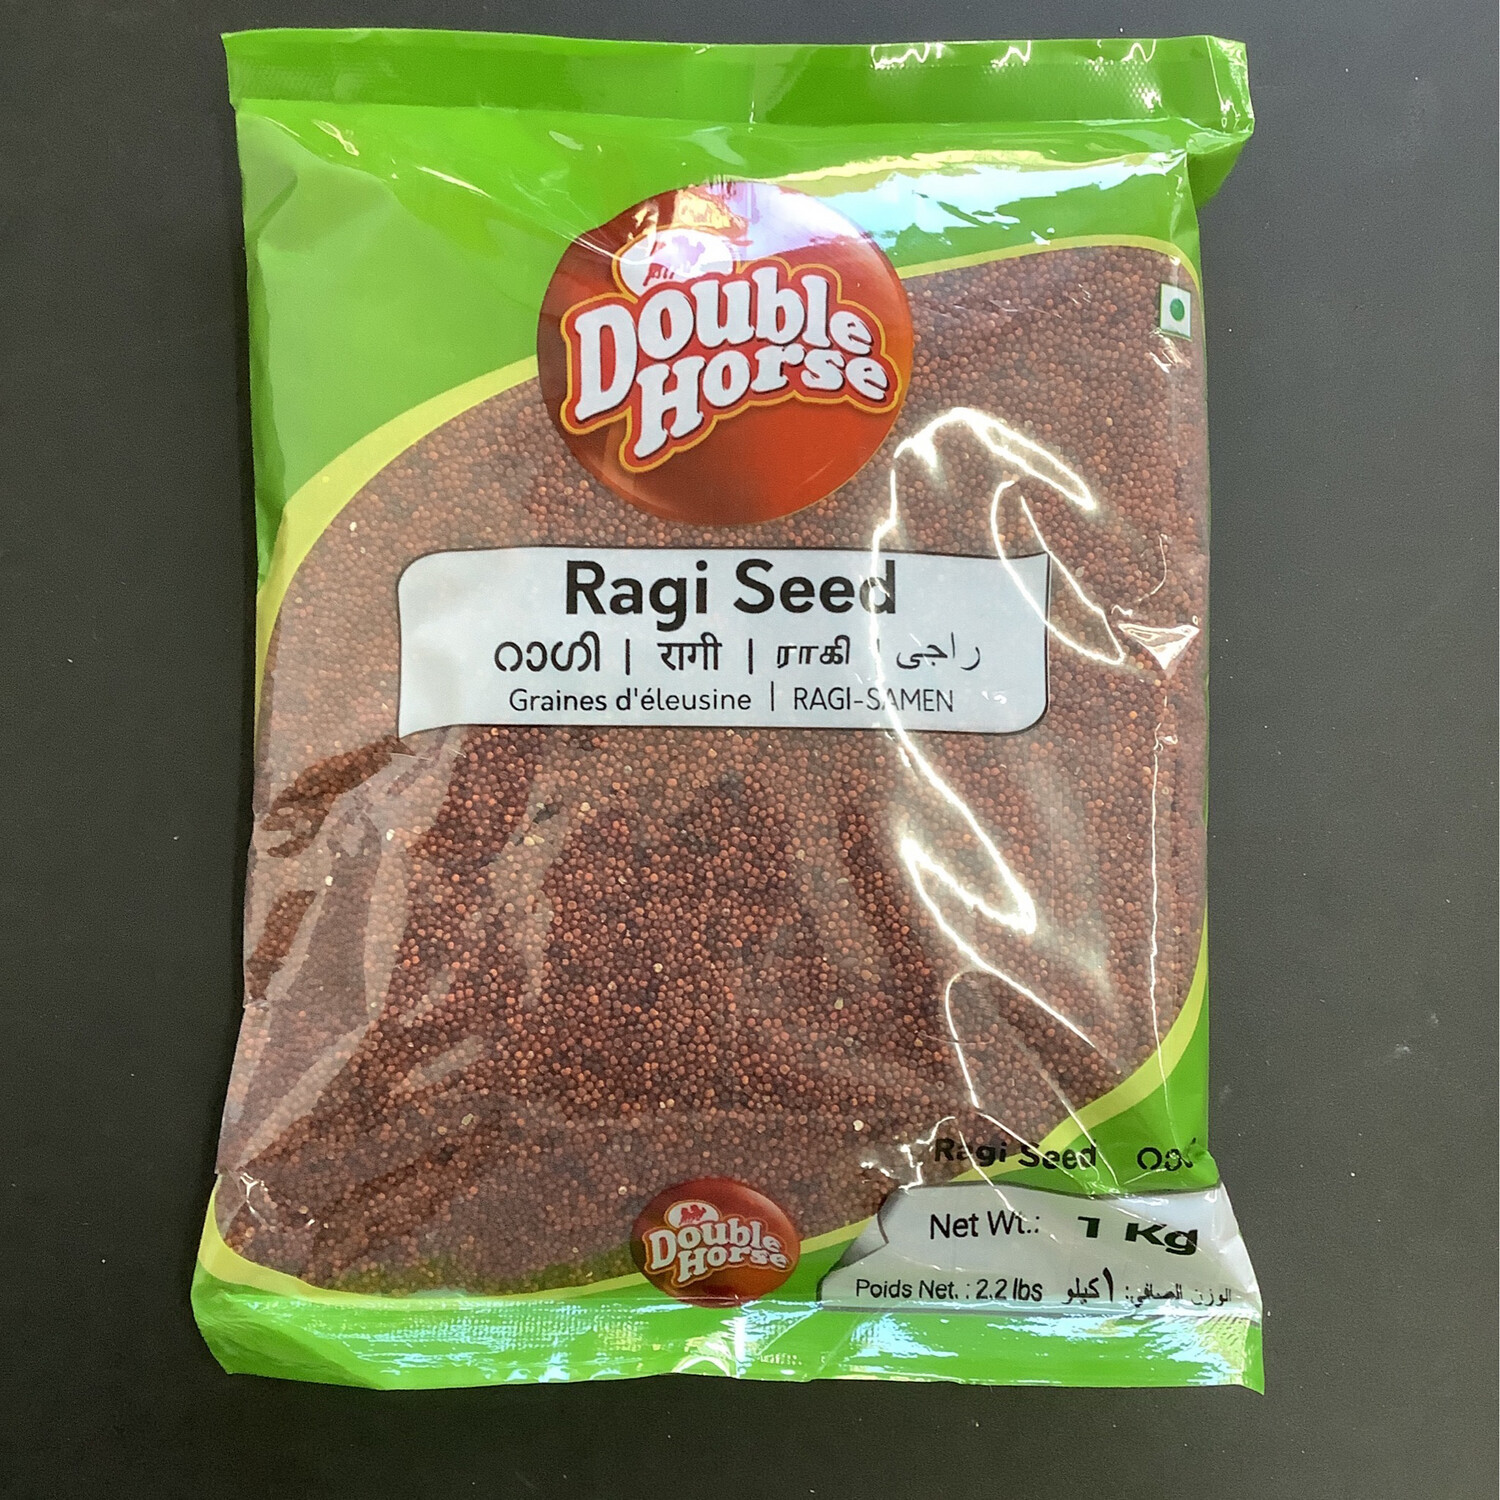 Double Horse Ragi Seed 1kg